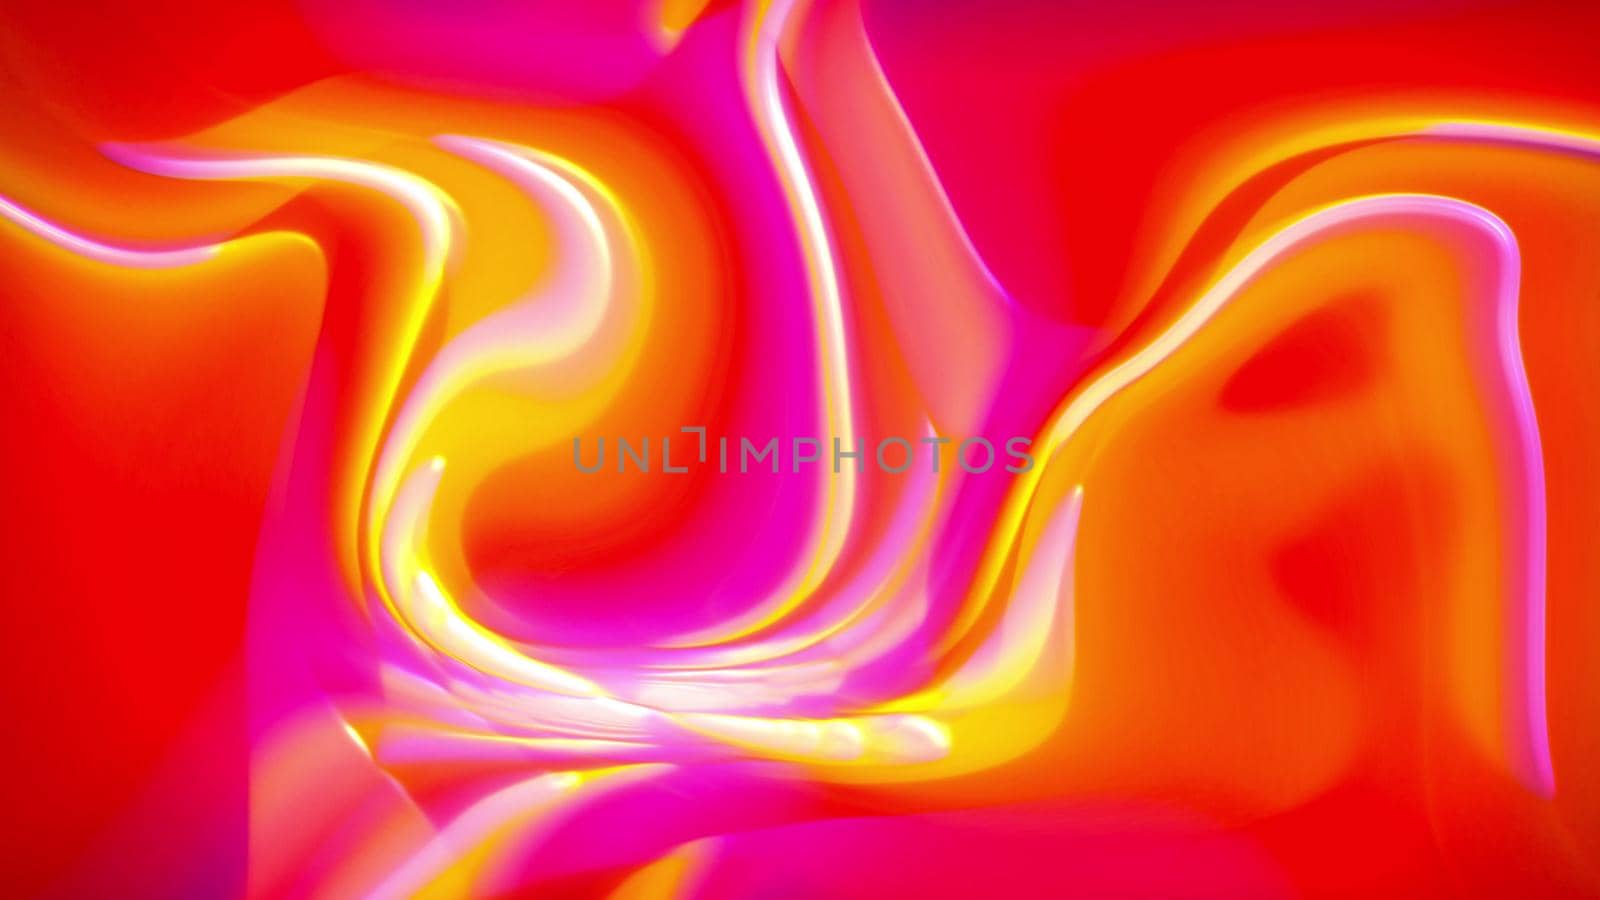 Neon wave by nolimit046